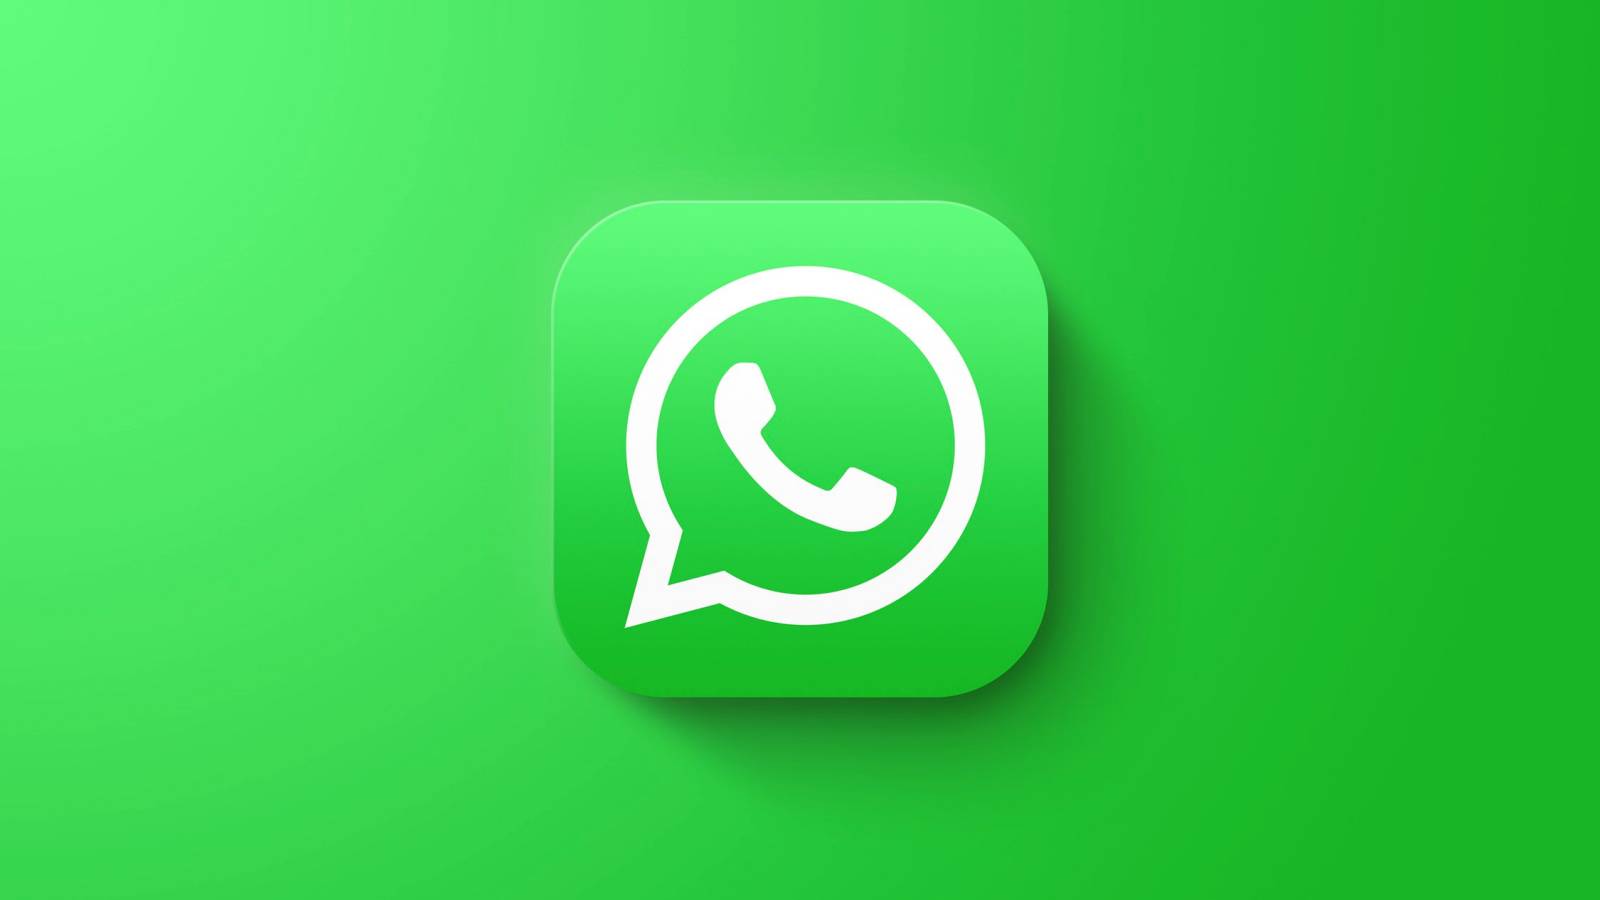 WhatsApp iPhone Android Noua Schimbare SECRETA Aplicatie